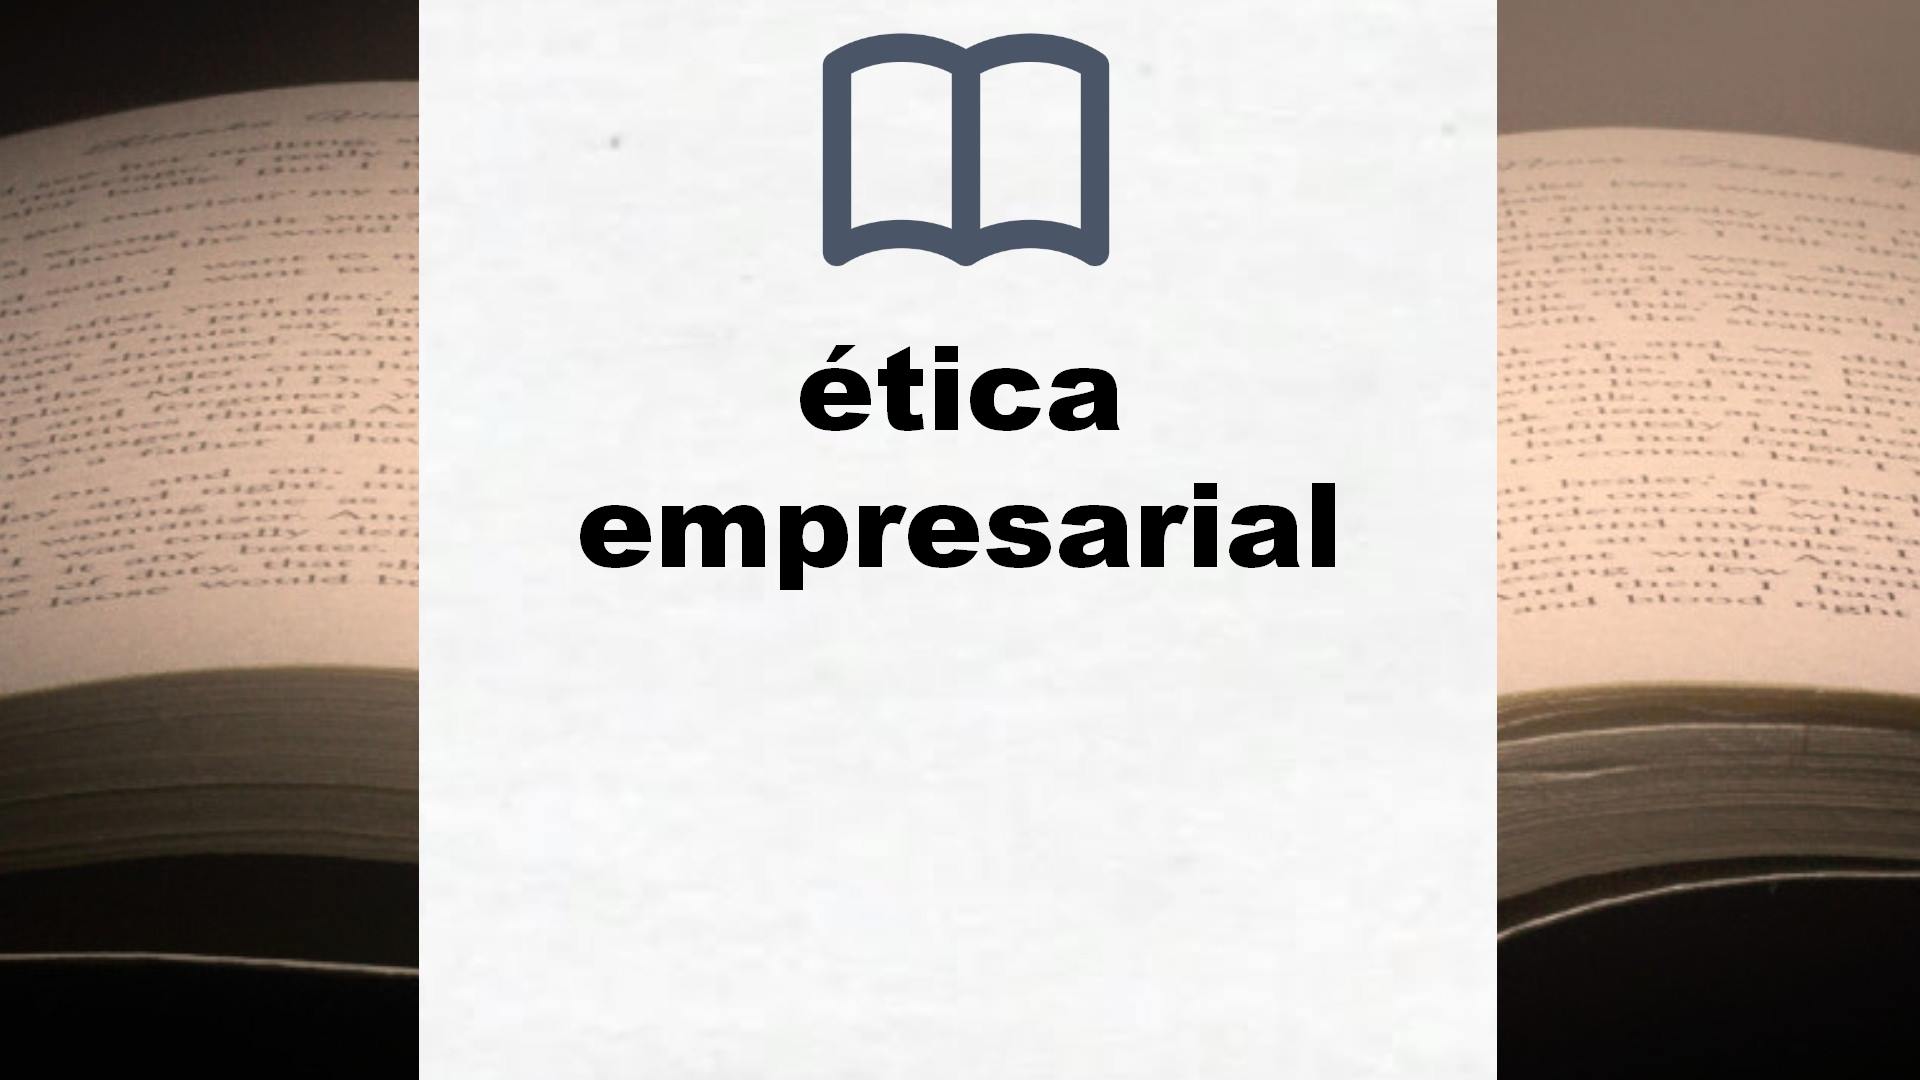 Libros sobre ética empresarial